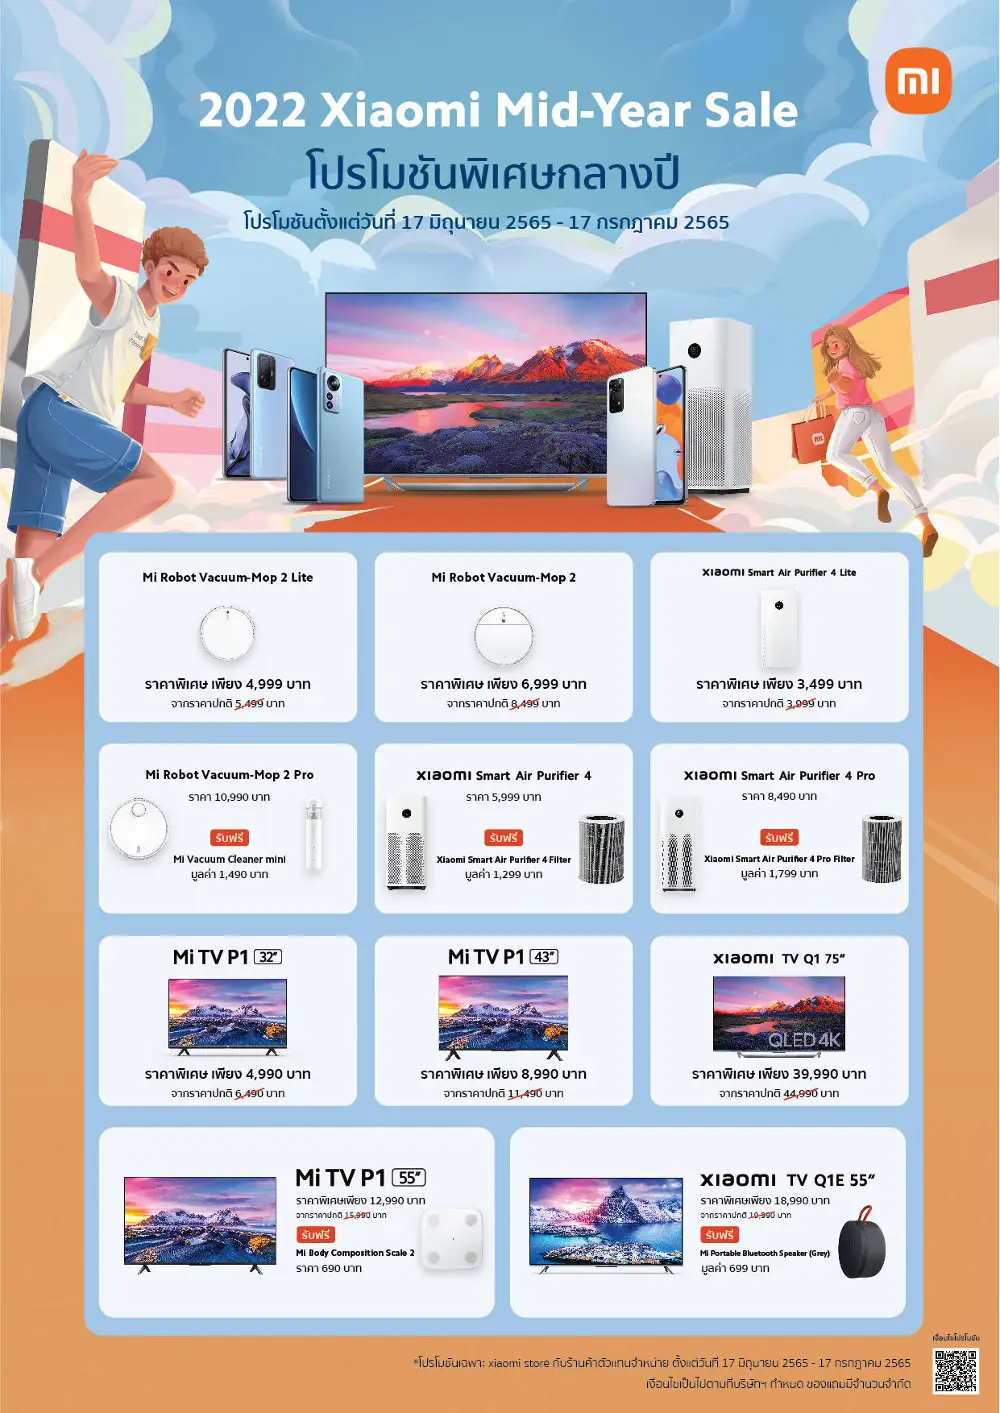 Xiaomi Mid-Year Sale 2022